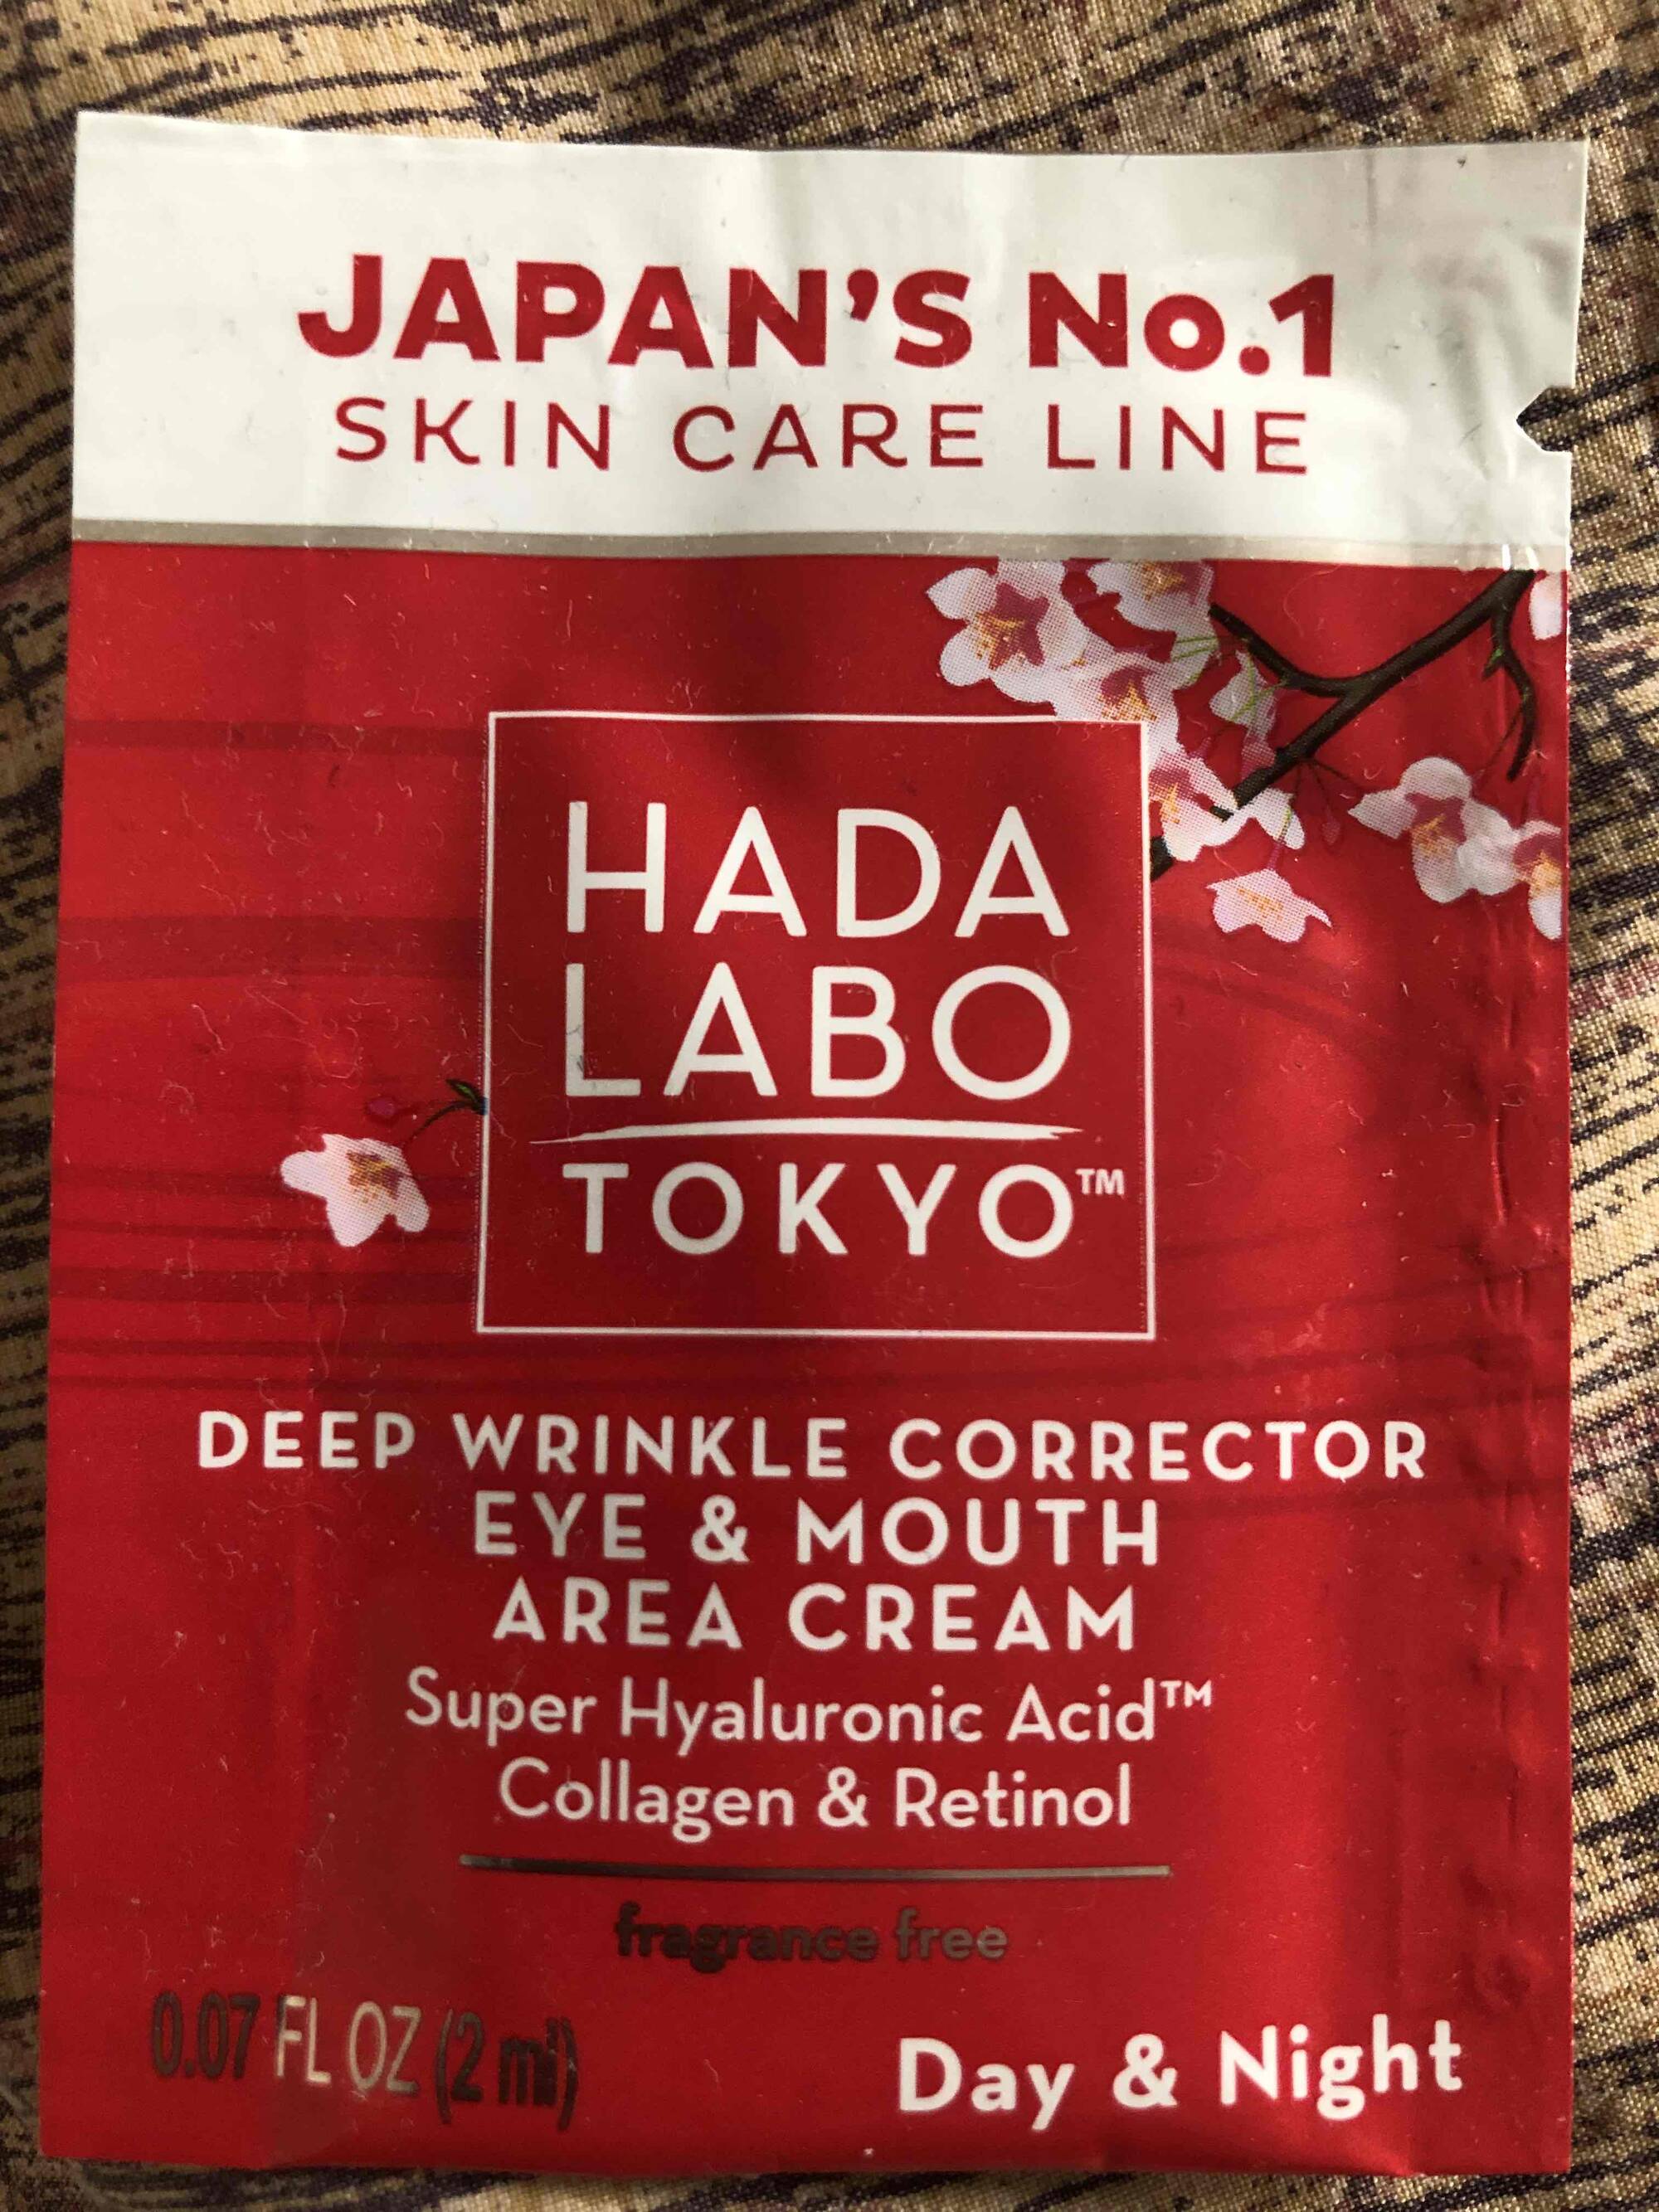 HADA LABO TOKYO - Deep wrinkle corrector eye & mouth area cream